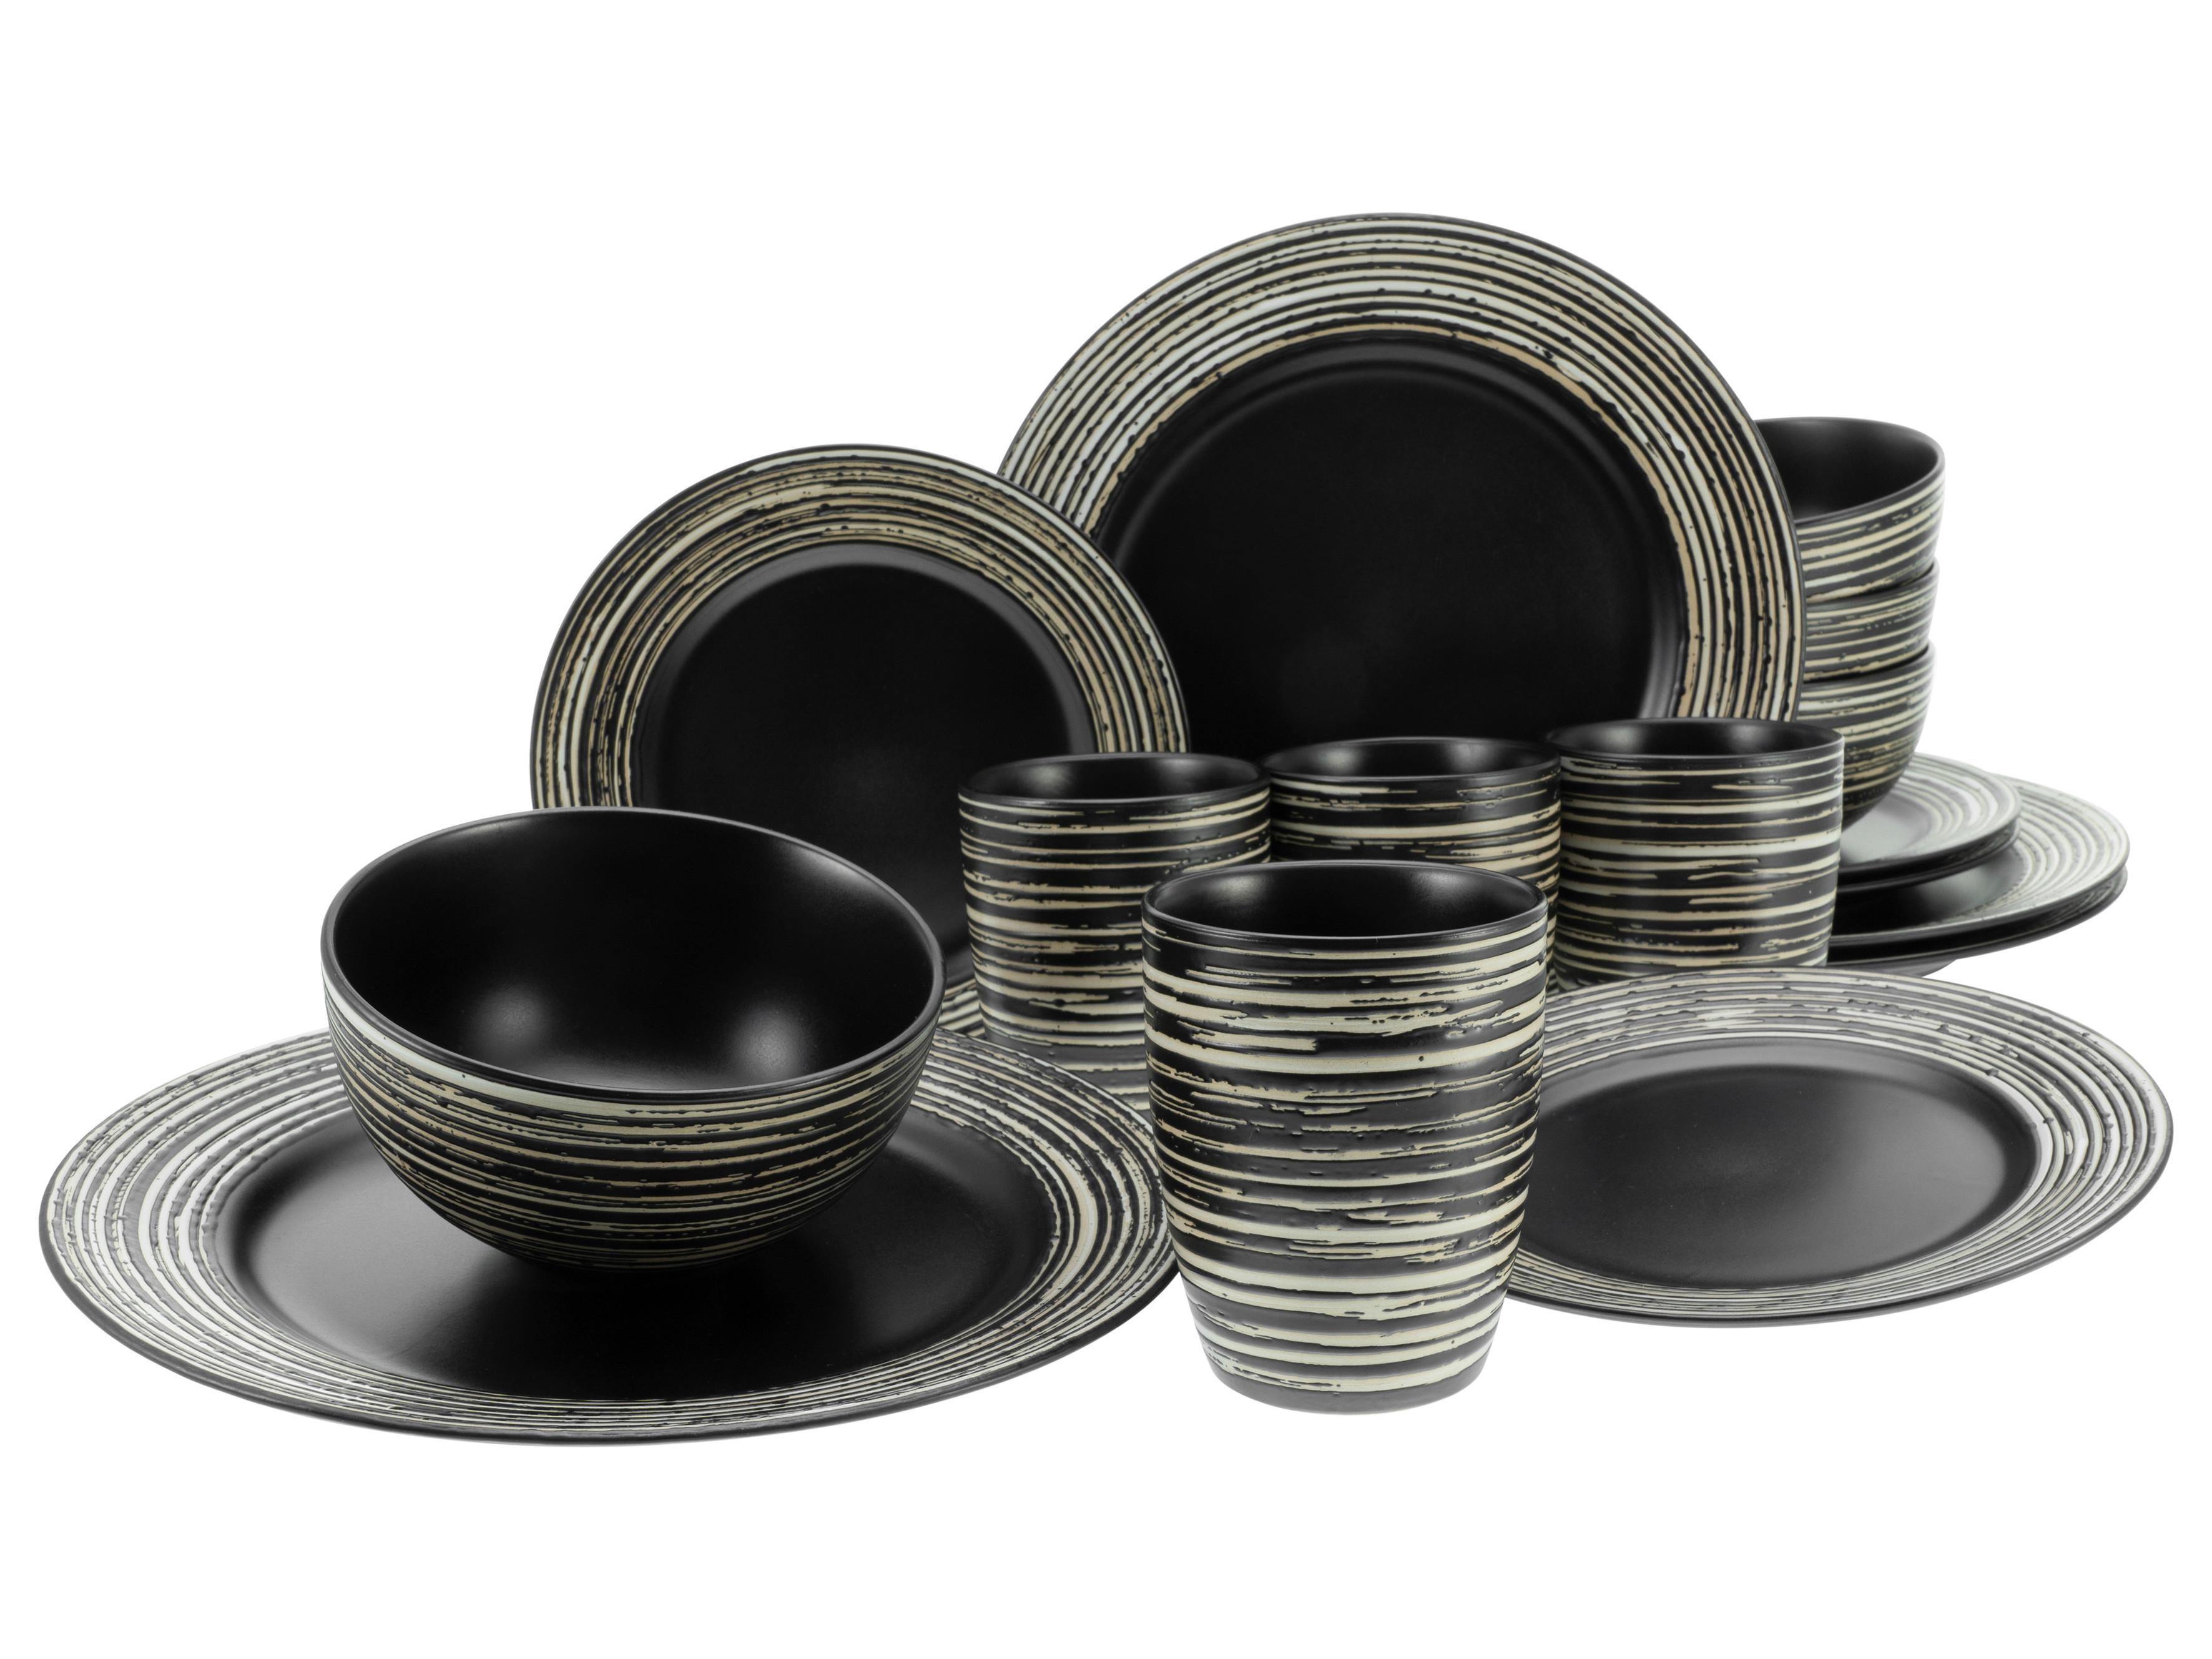 Kombinovaná Souprava 16- Dílná, Černá/béžová - černá/béžová, keramika (37/25,5/31,5cm) - Creatable